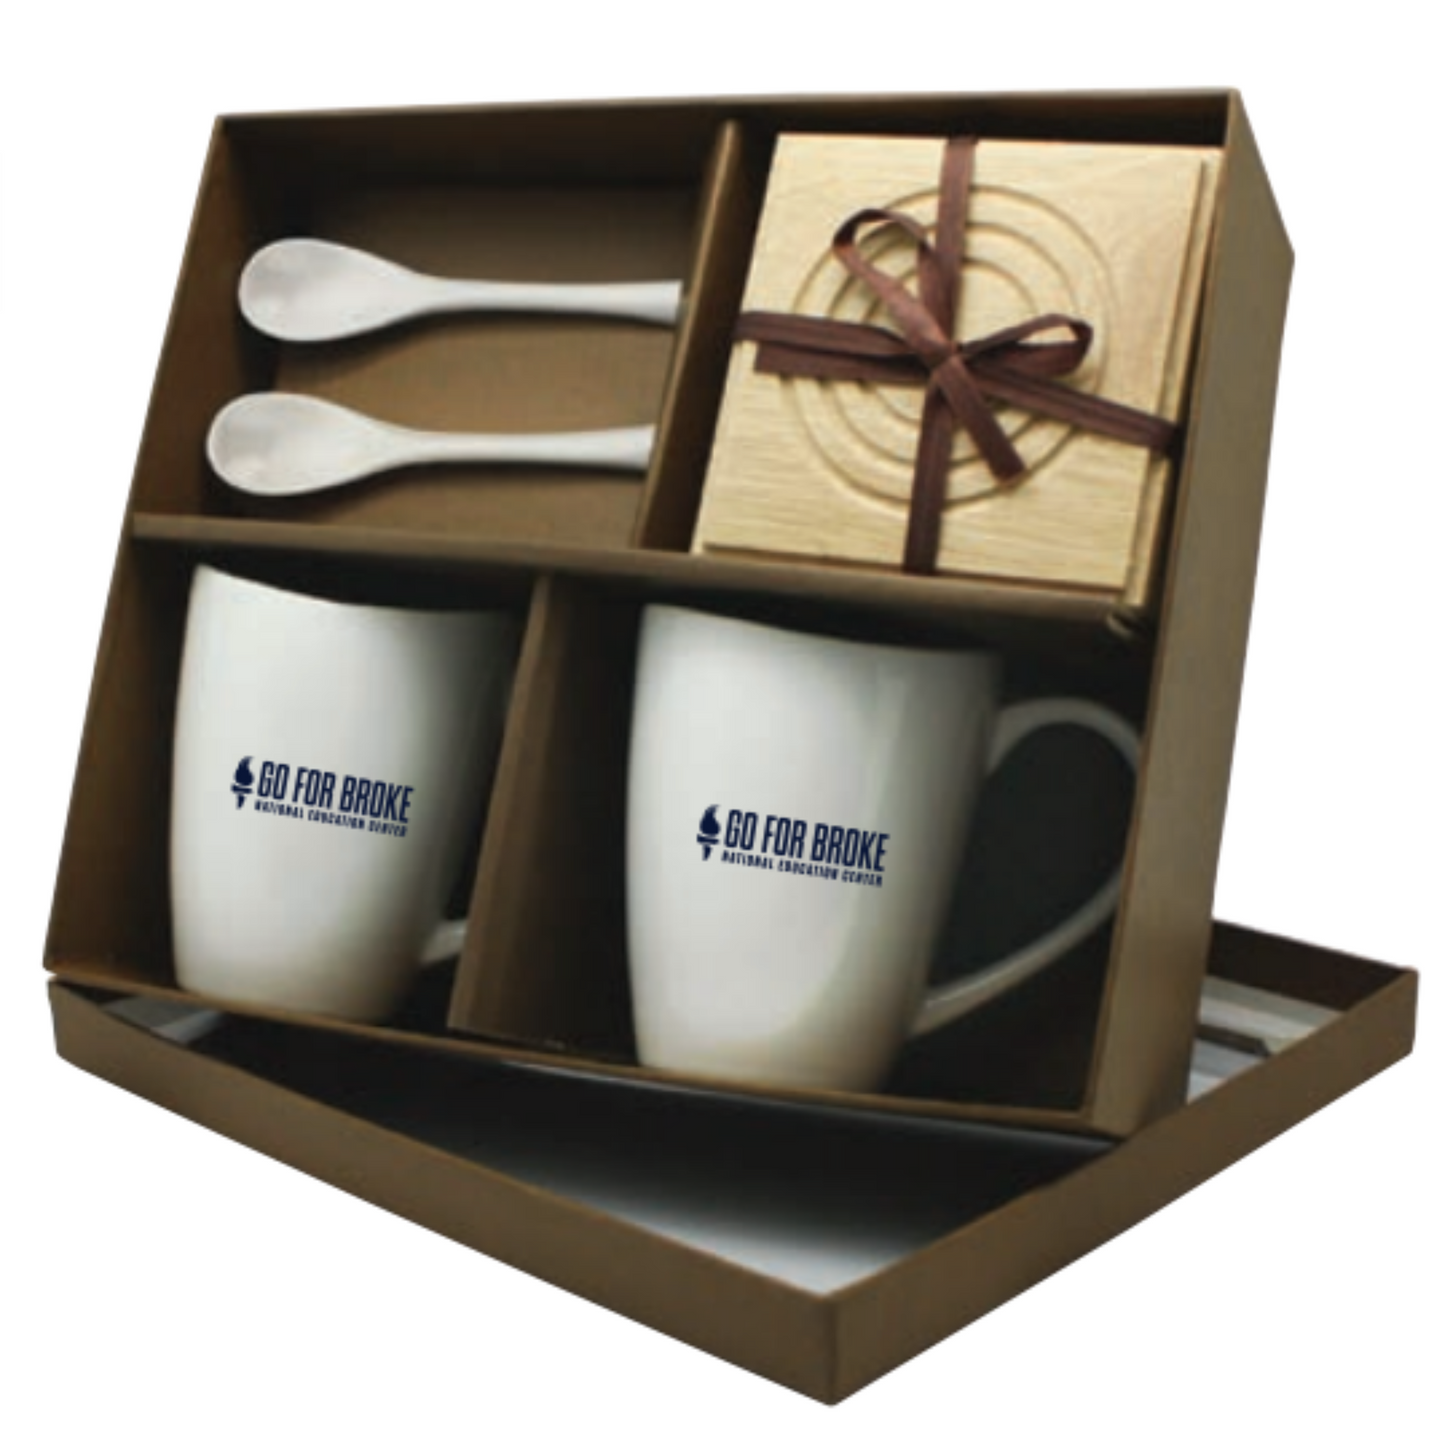 GFBNEC Coffee Mug Gift Set